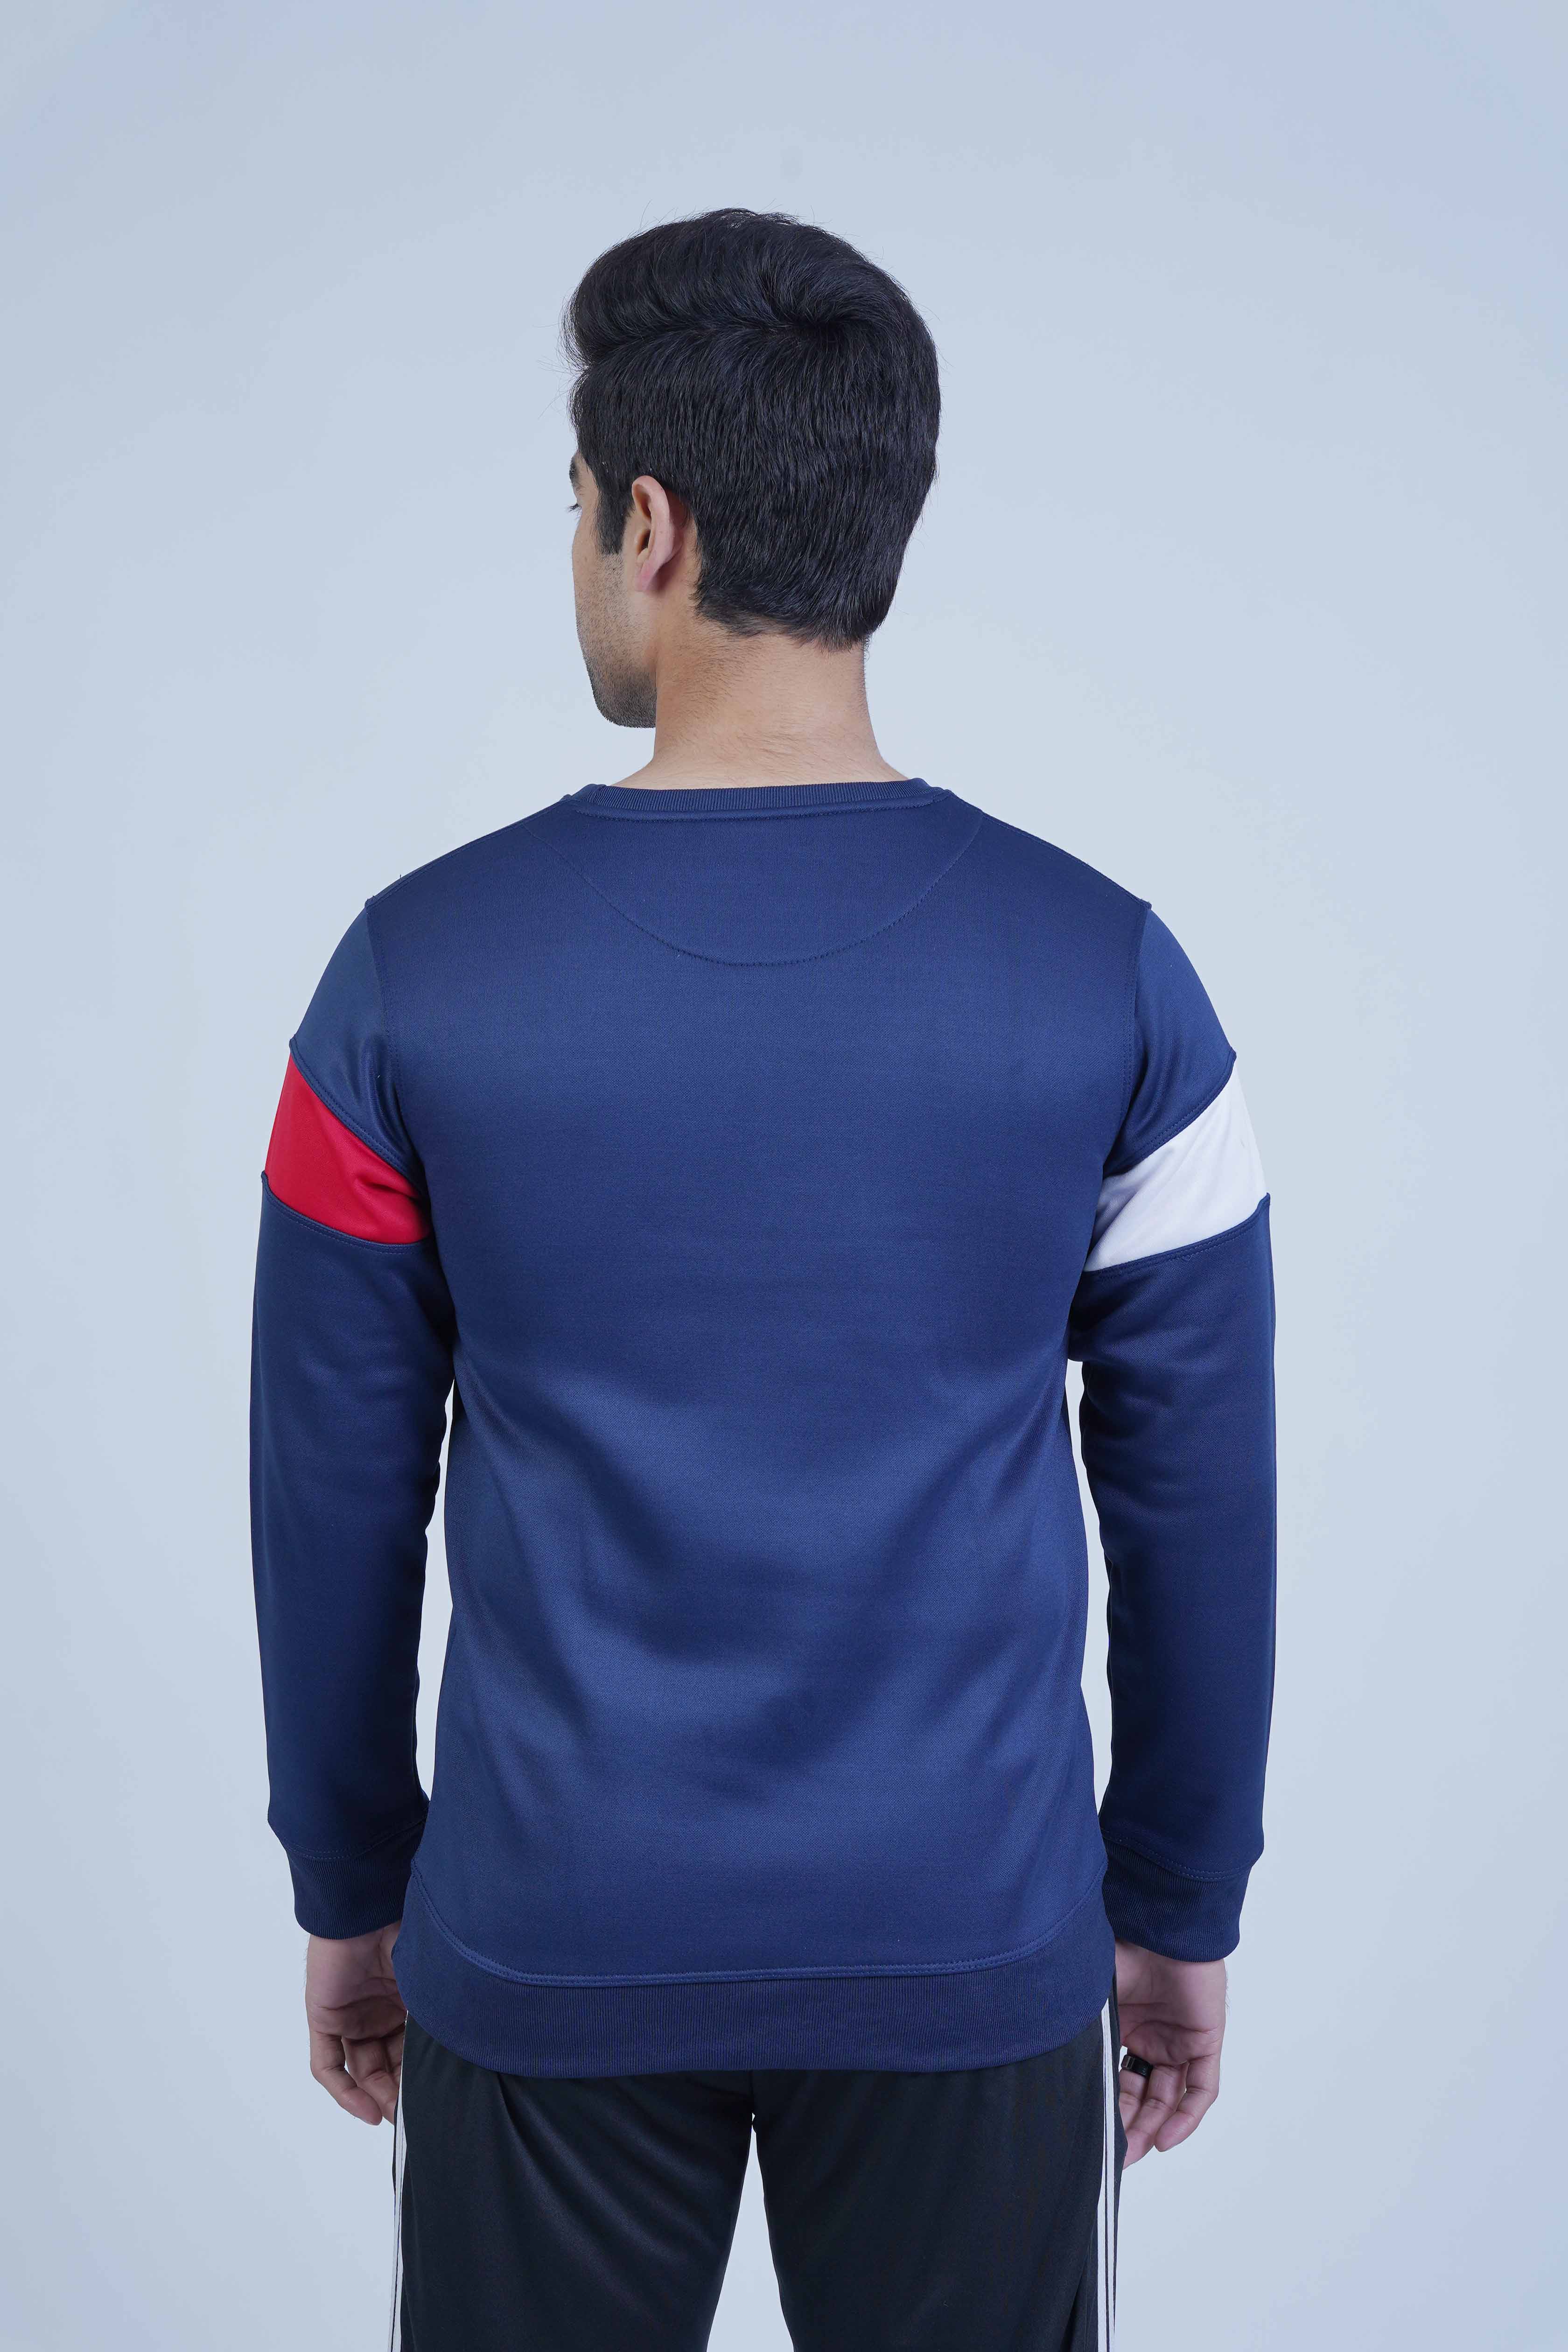 Urban Stripe Navy Blue Sweatshirt - The Xea Men's Fashion